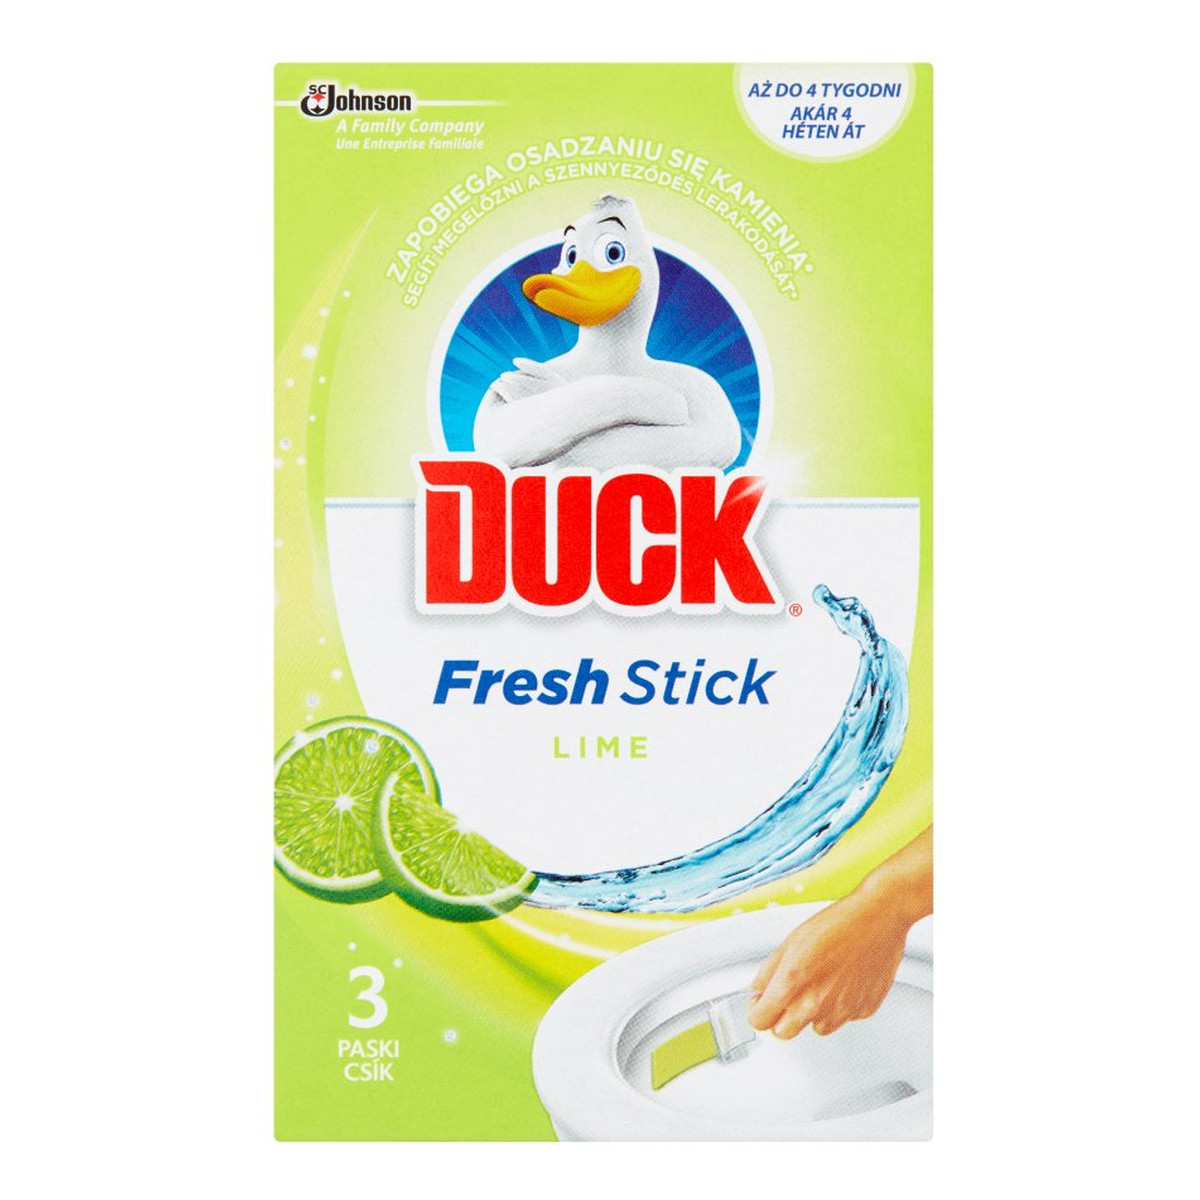 Duck Fresh Stick Lime Żelowe paski do toalet (3 x 9 g) 27g